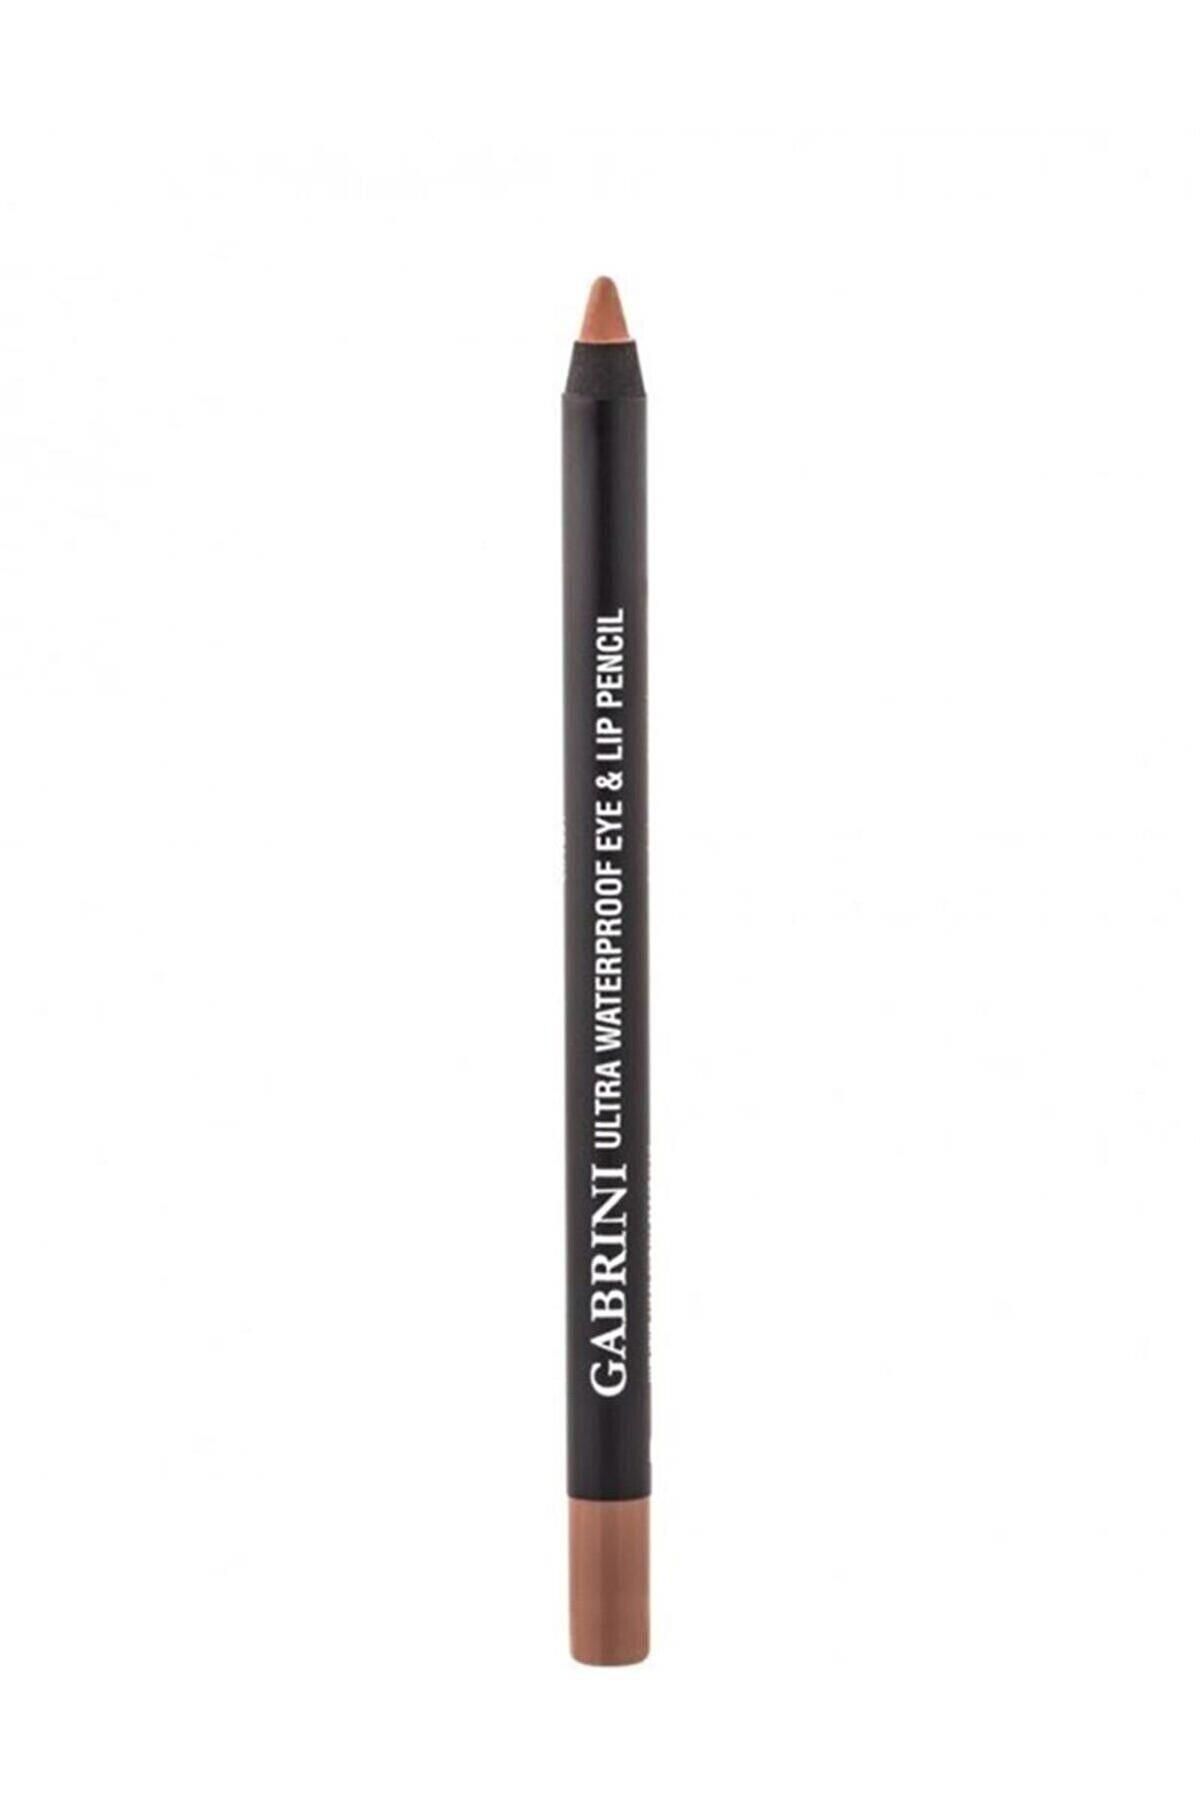 Gabrini Ultra Waterproof Eye & Lip Pencil 10